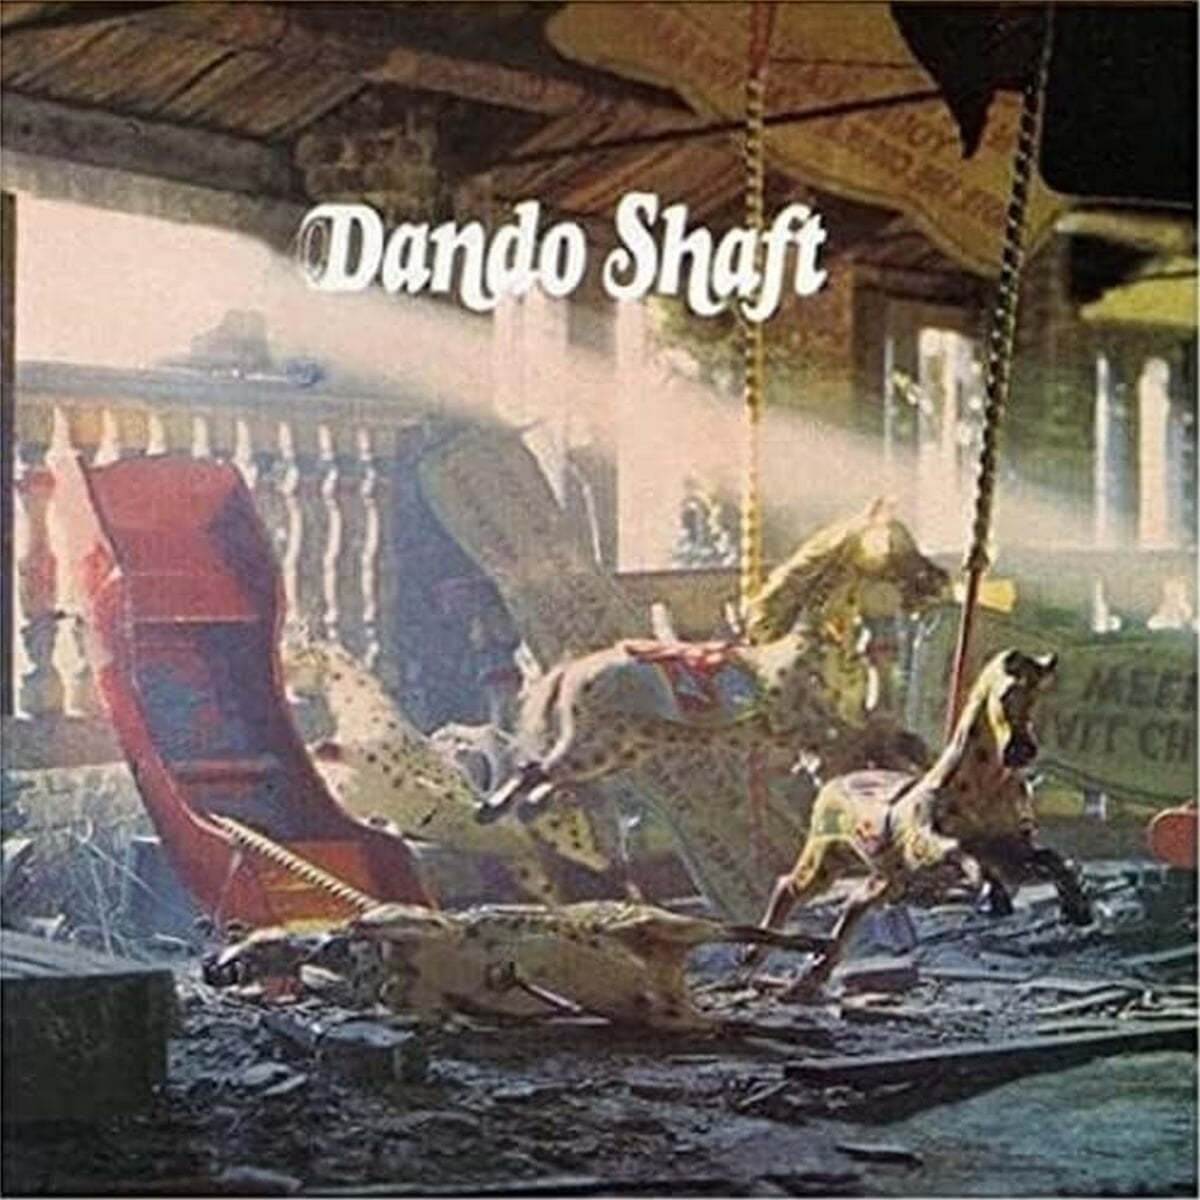 Dando Shaft (단도 샤프트) - Dando Shaft [LP]